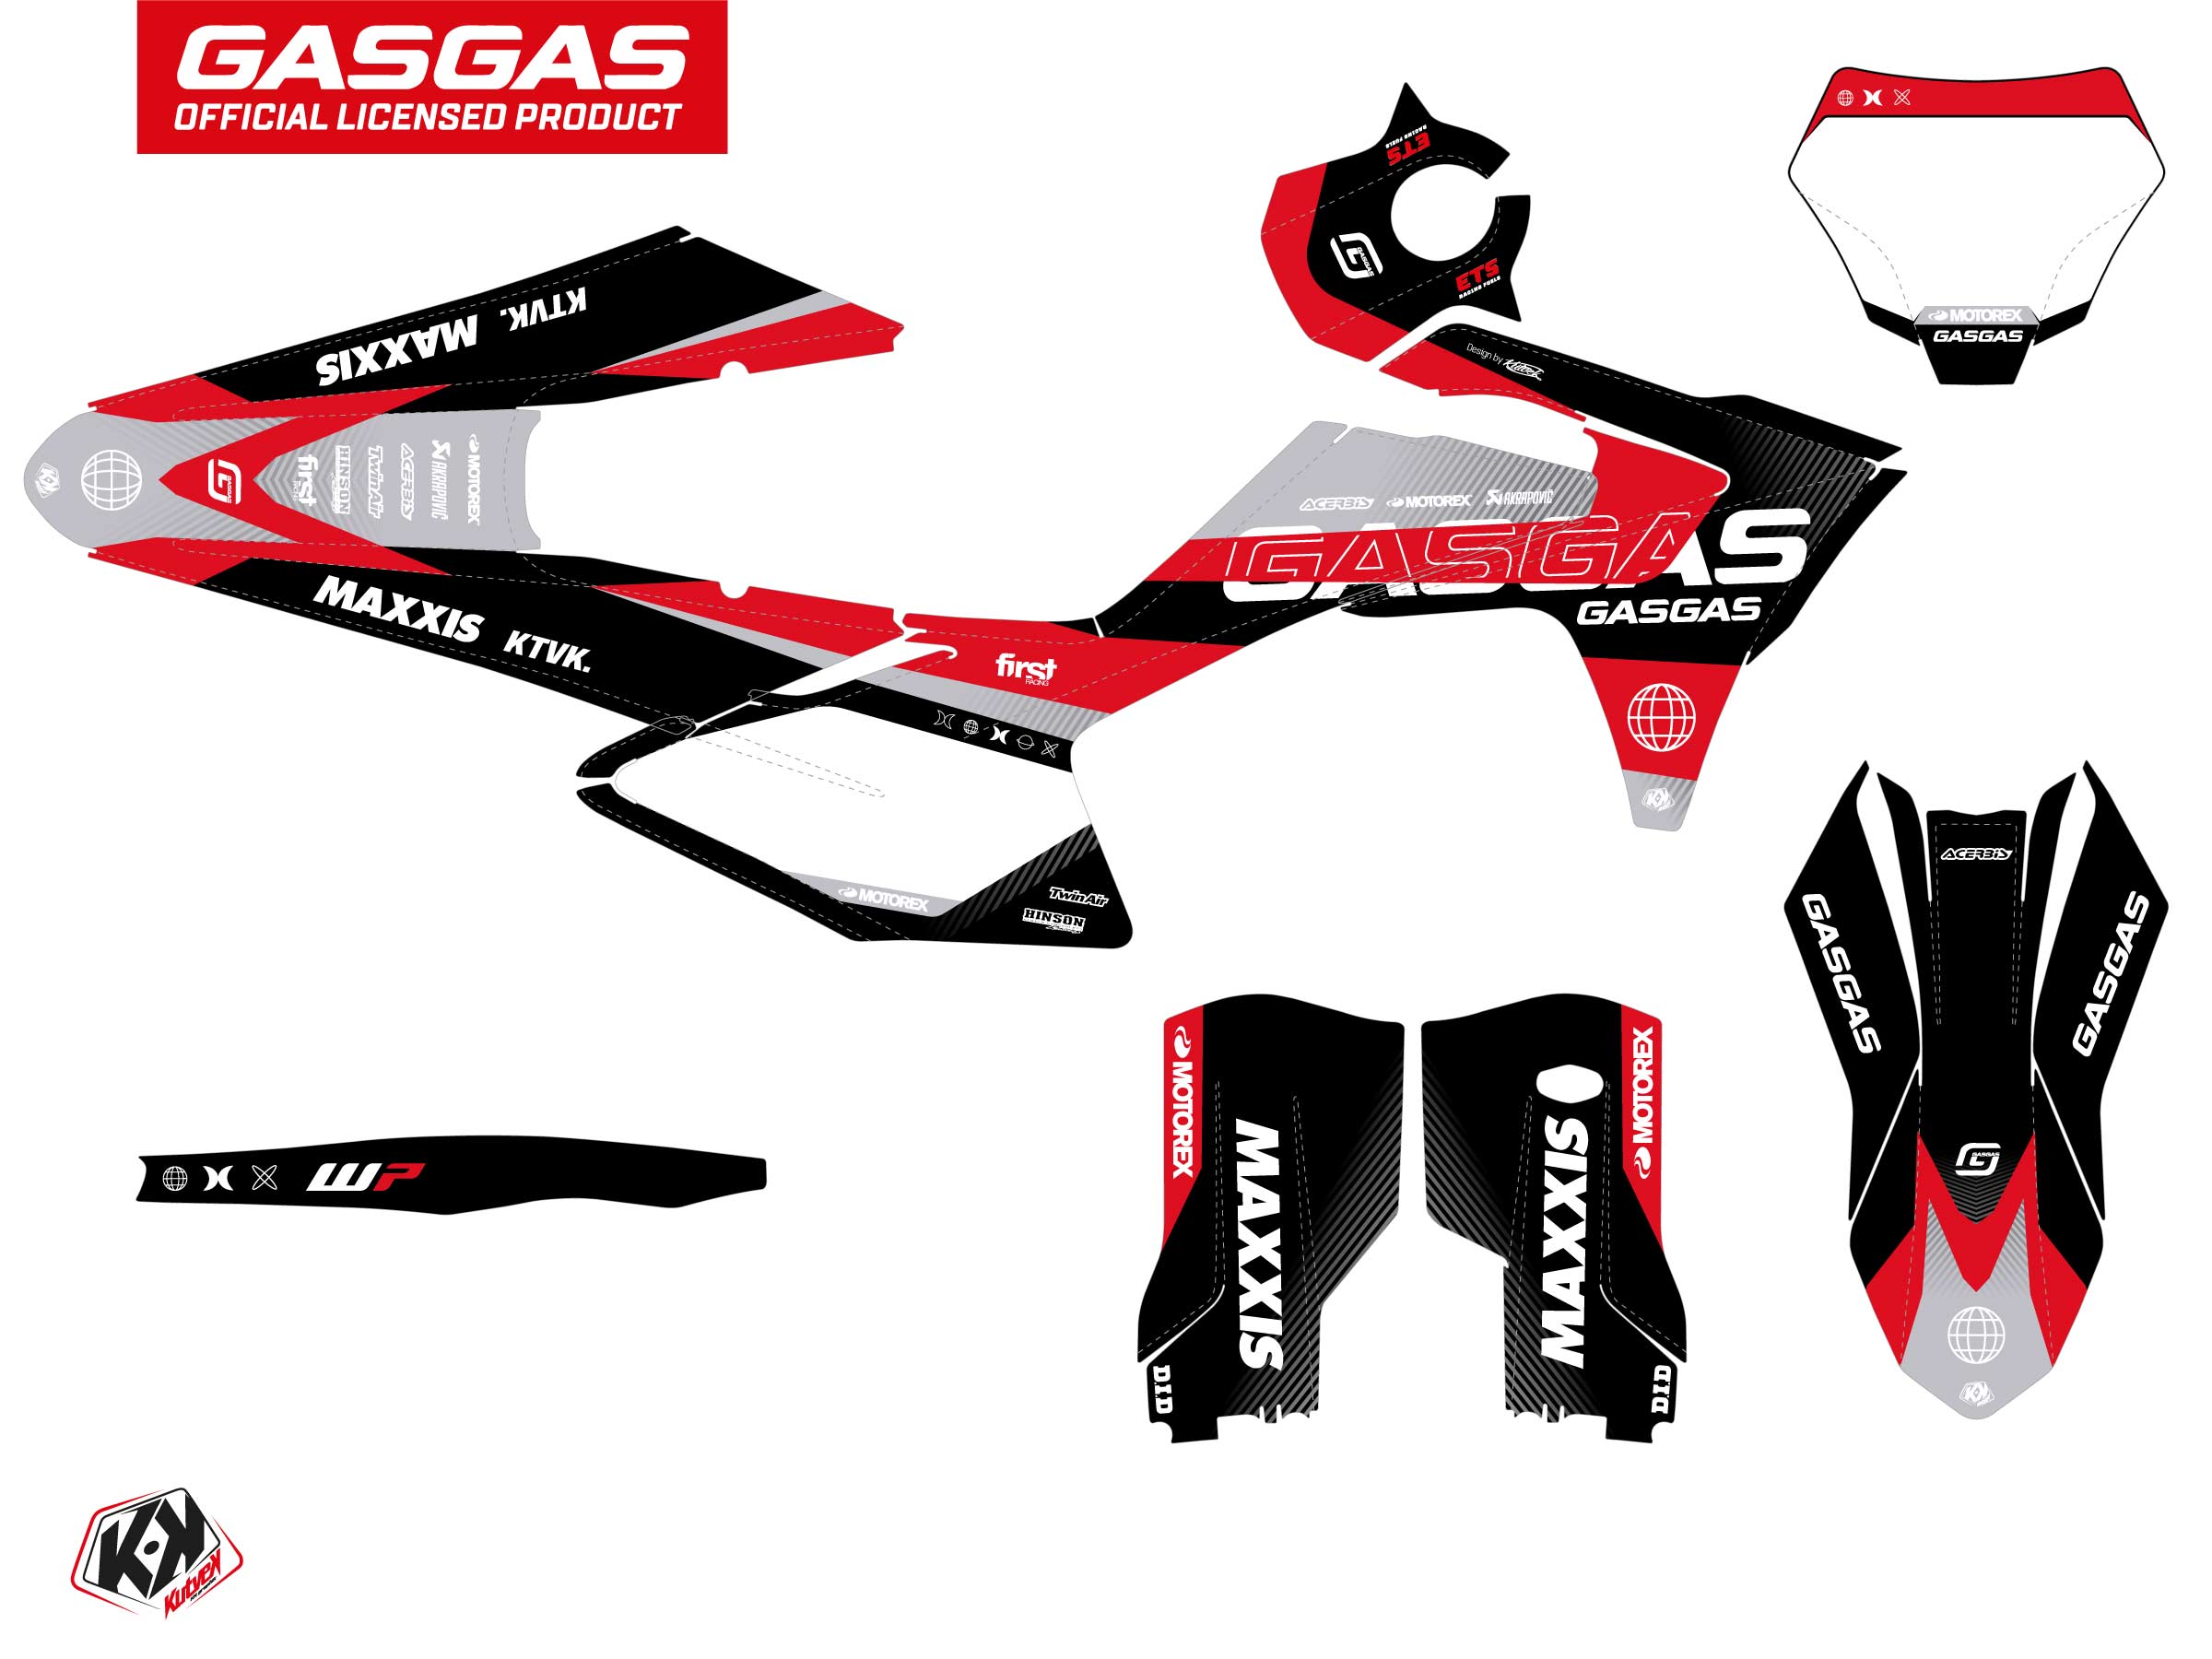 Gasgas Ex 350 F Dirt Bike Kanyon Graphic Kit Black